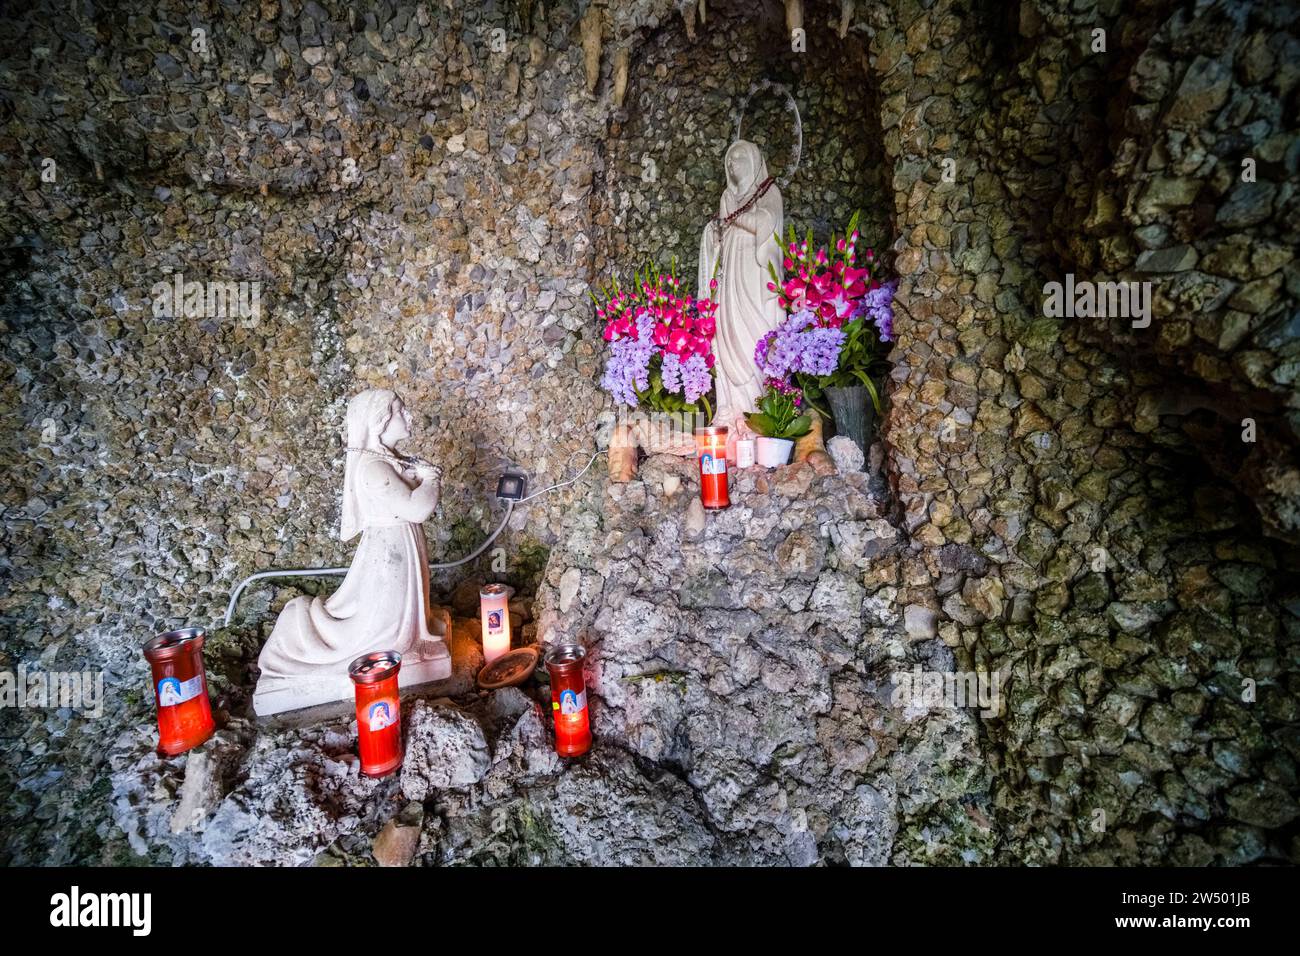 The Grotta Madonna di Lourdes in Trecchina, an important pilgrimage destination in this region. Stock Photo